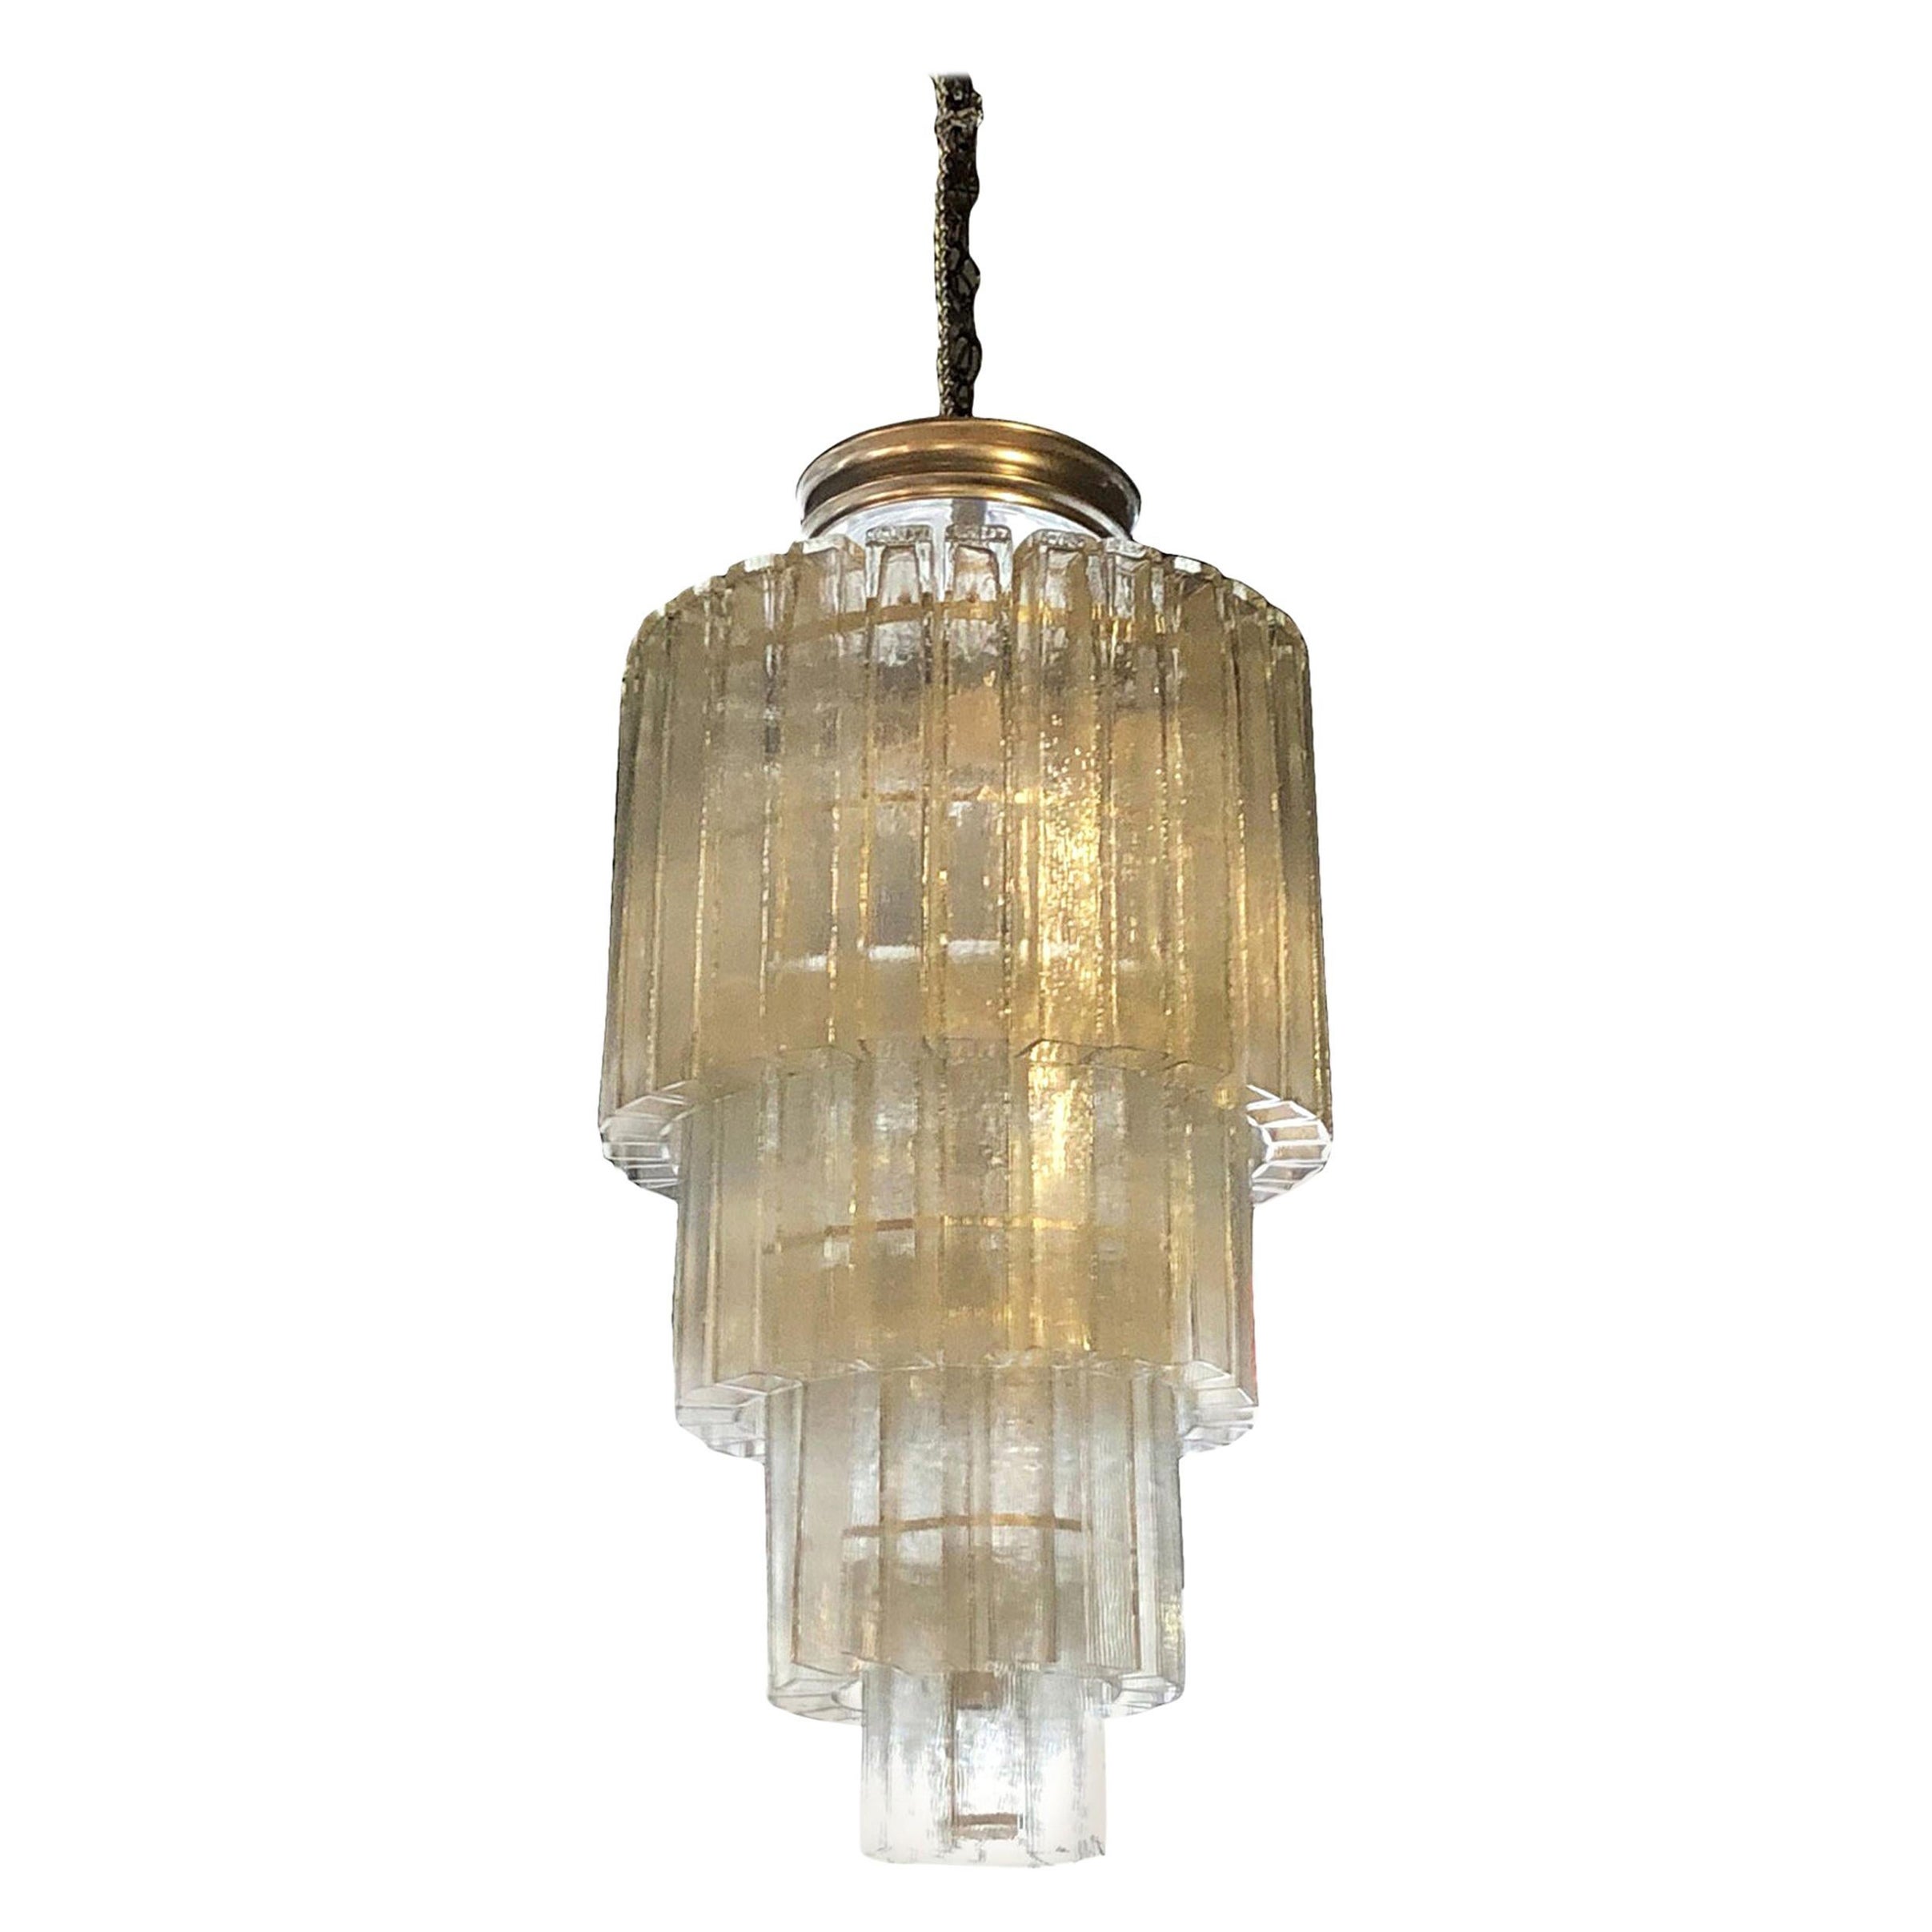 Siglo XX Araña italiana vintage de cuatro niveles de cristal de Murano, luz de níquel